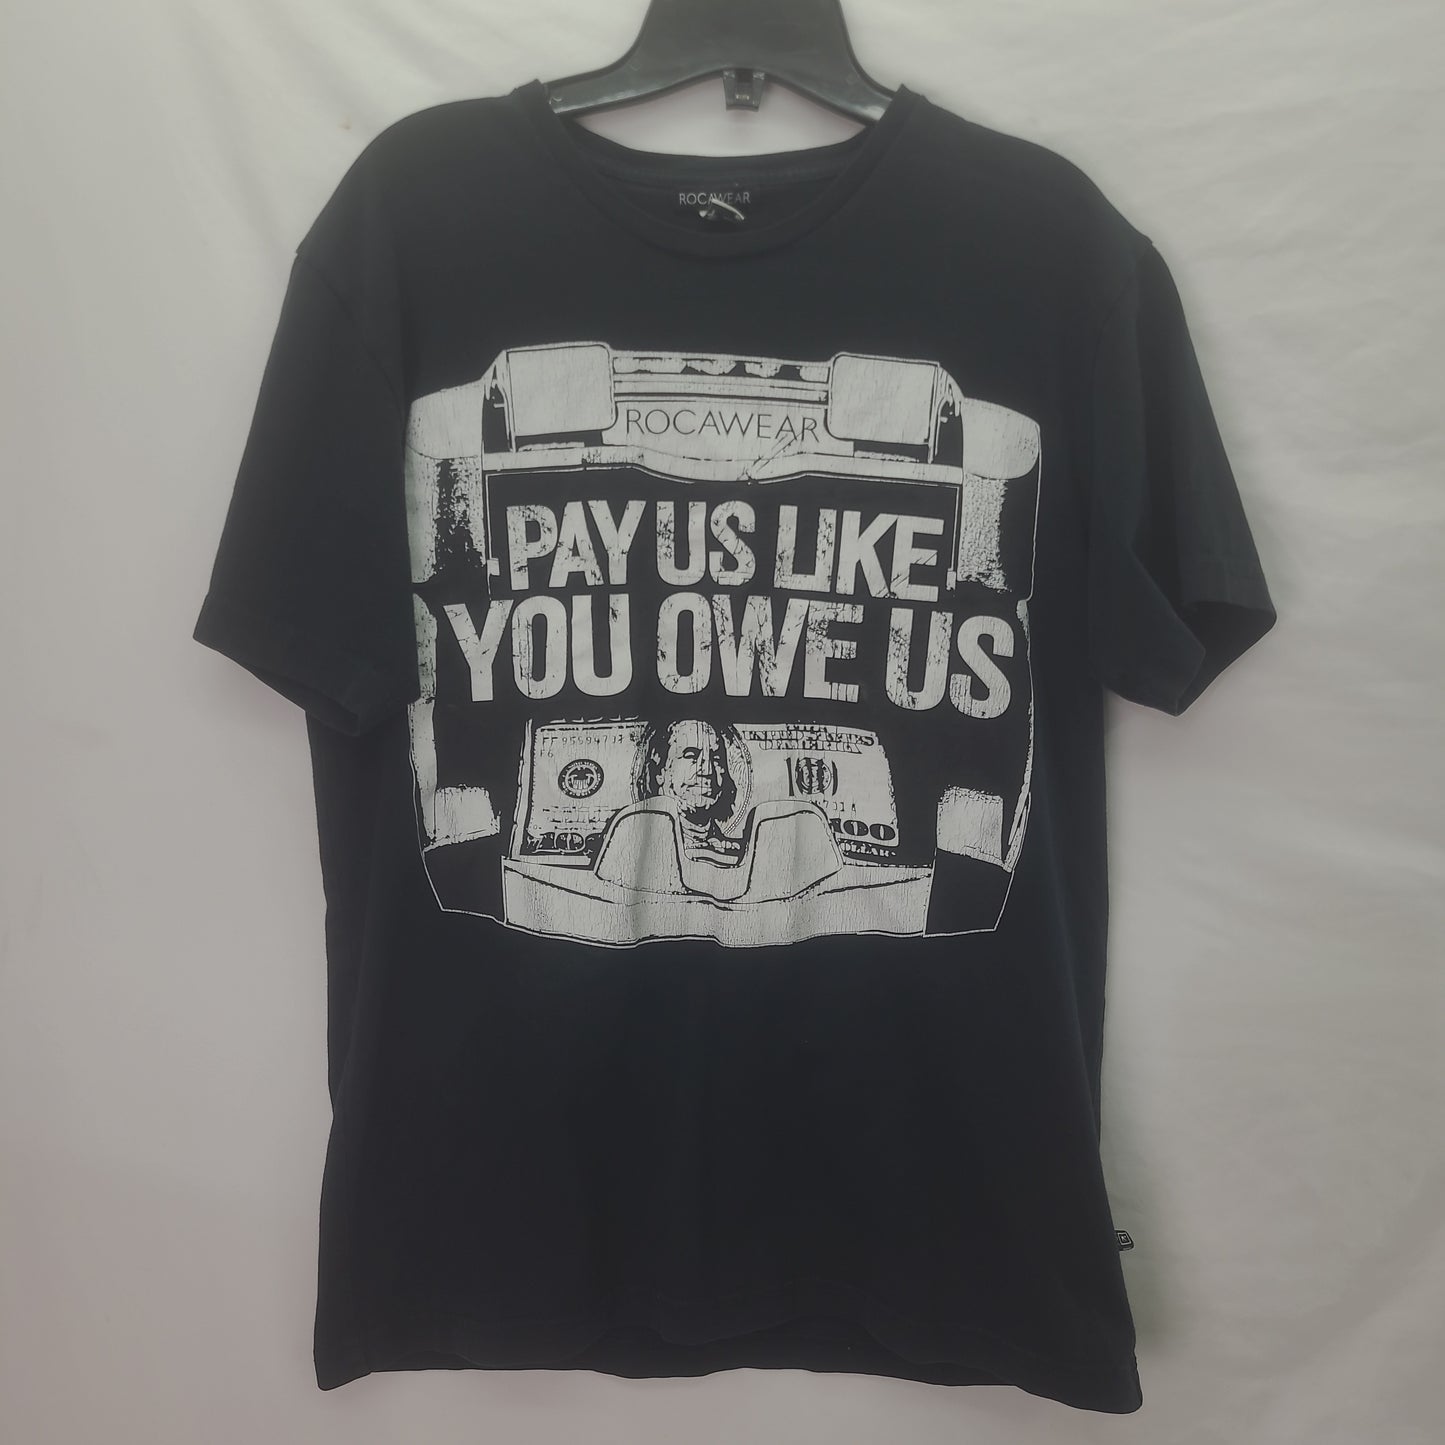 Rocawear "Pay us like you owe us" T-Shirt Black - M